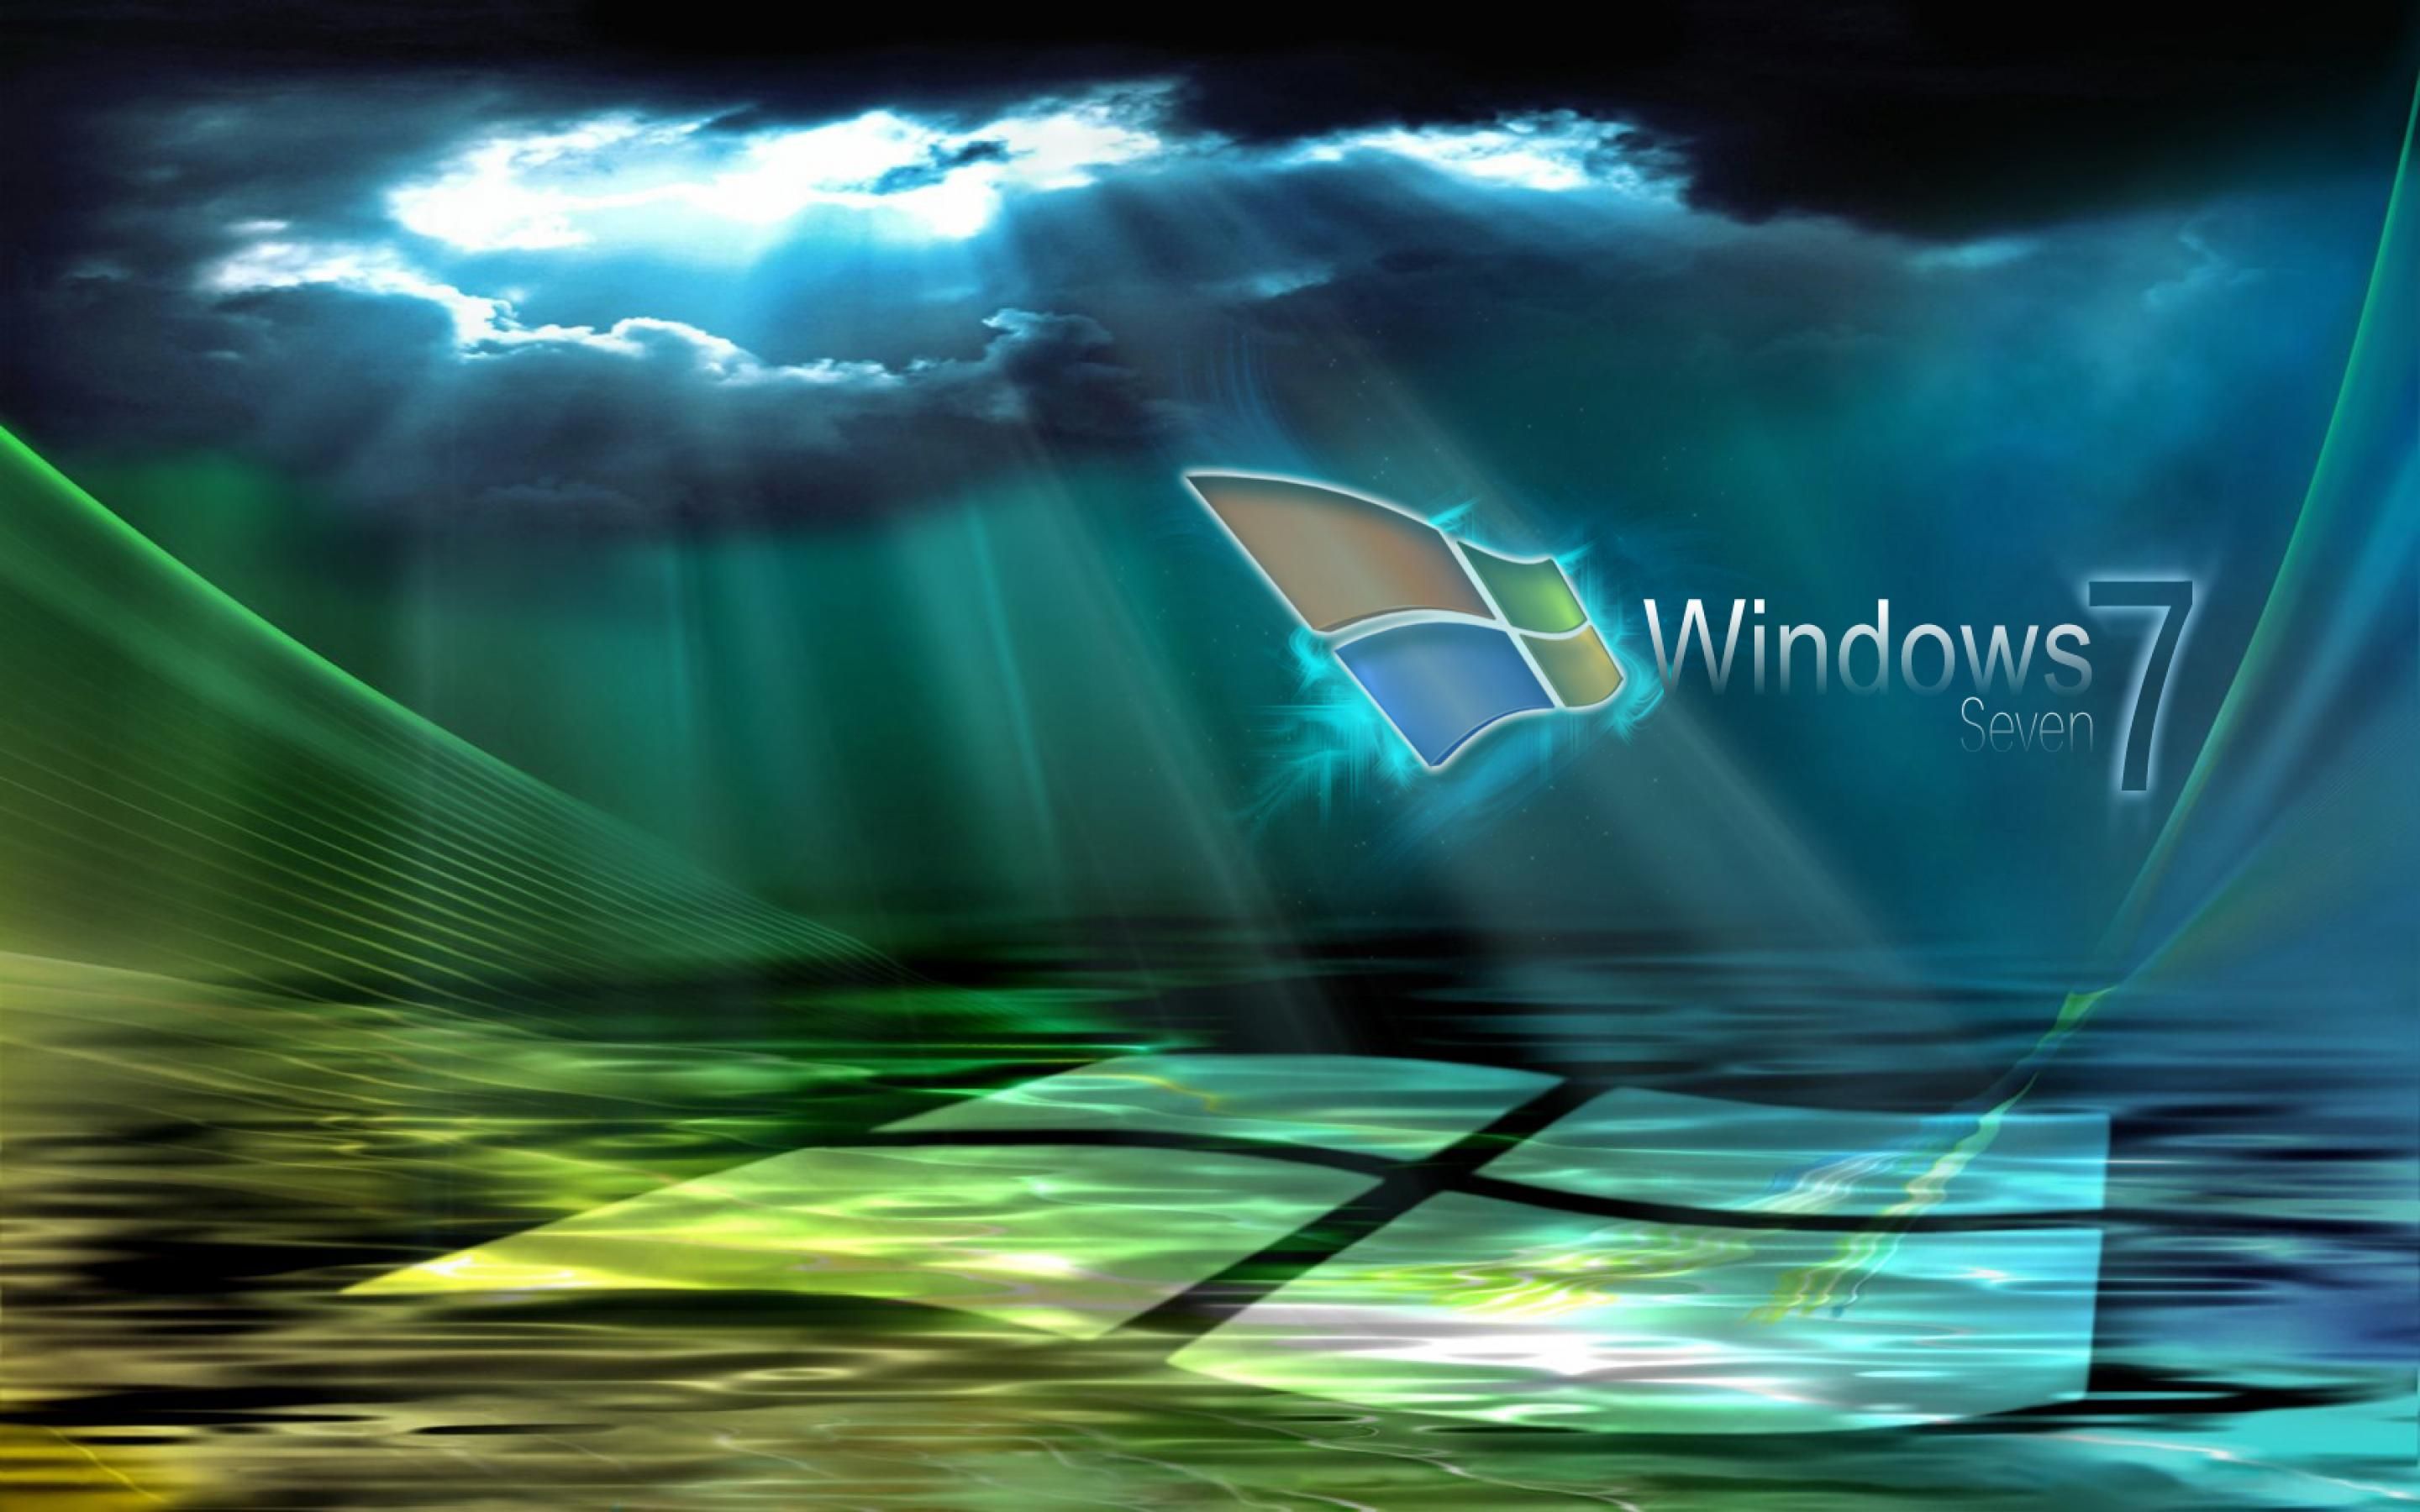 Windows 7 Backgrounds